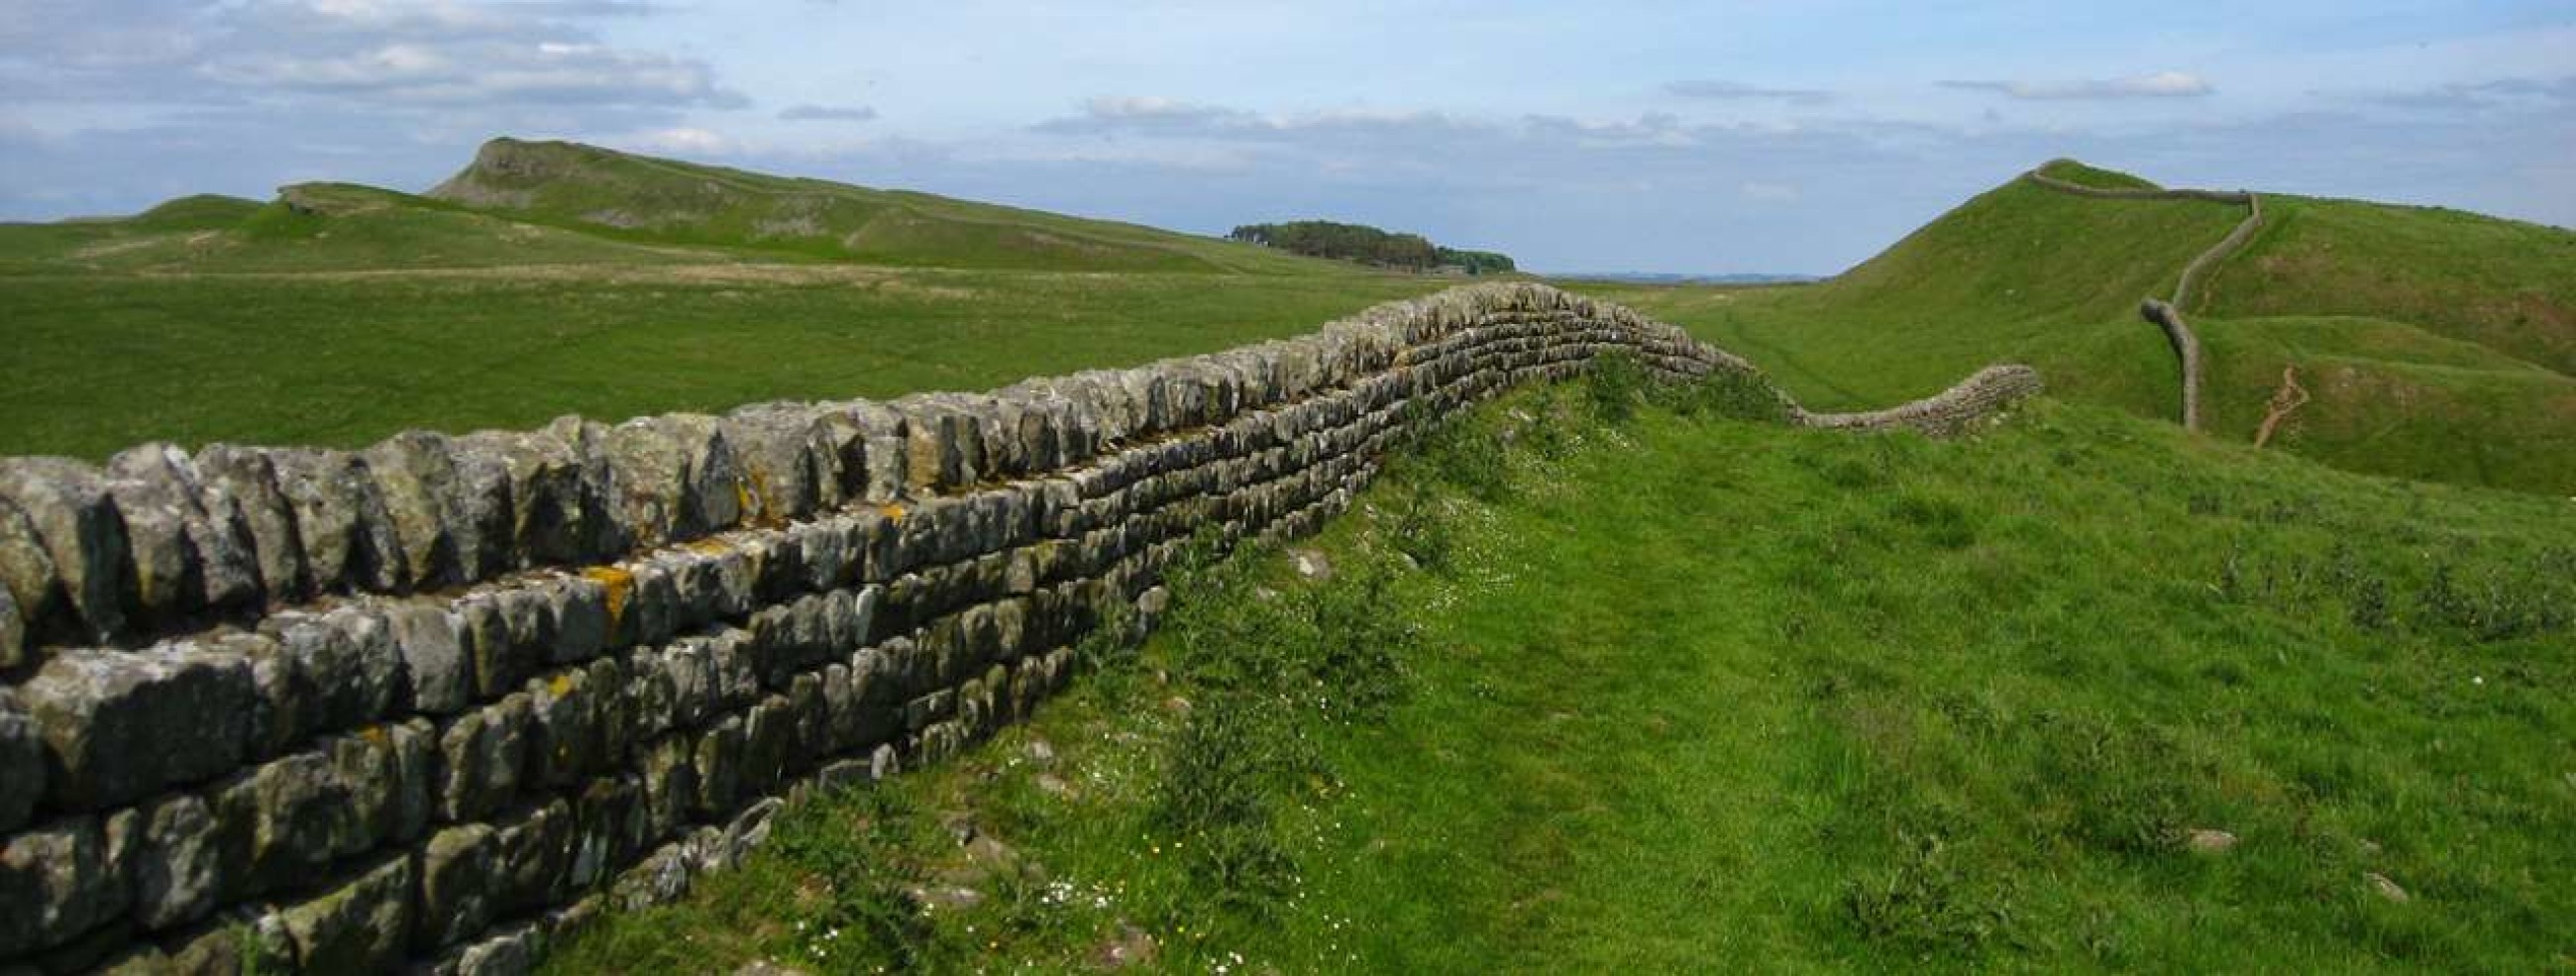 Hadrian's Wall #2